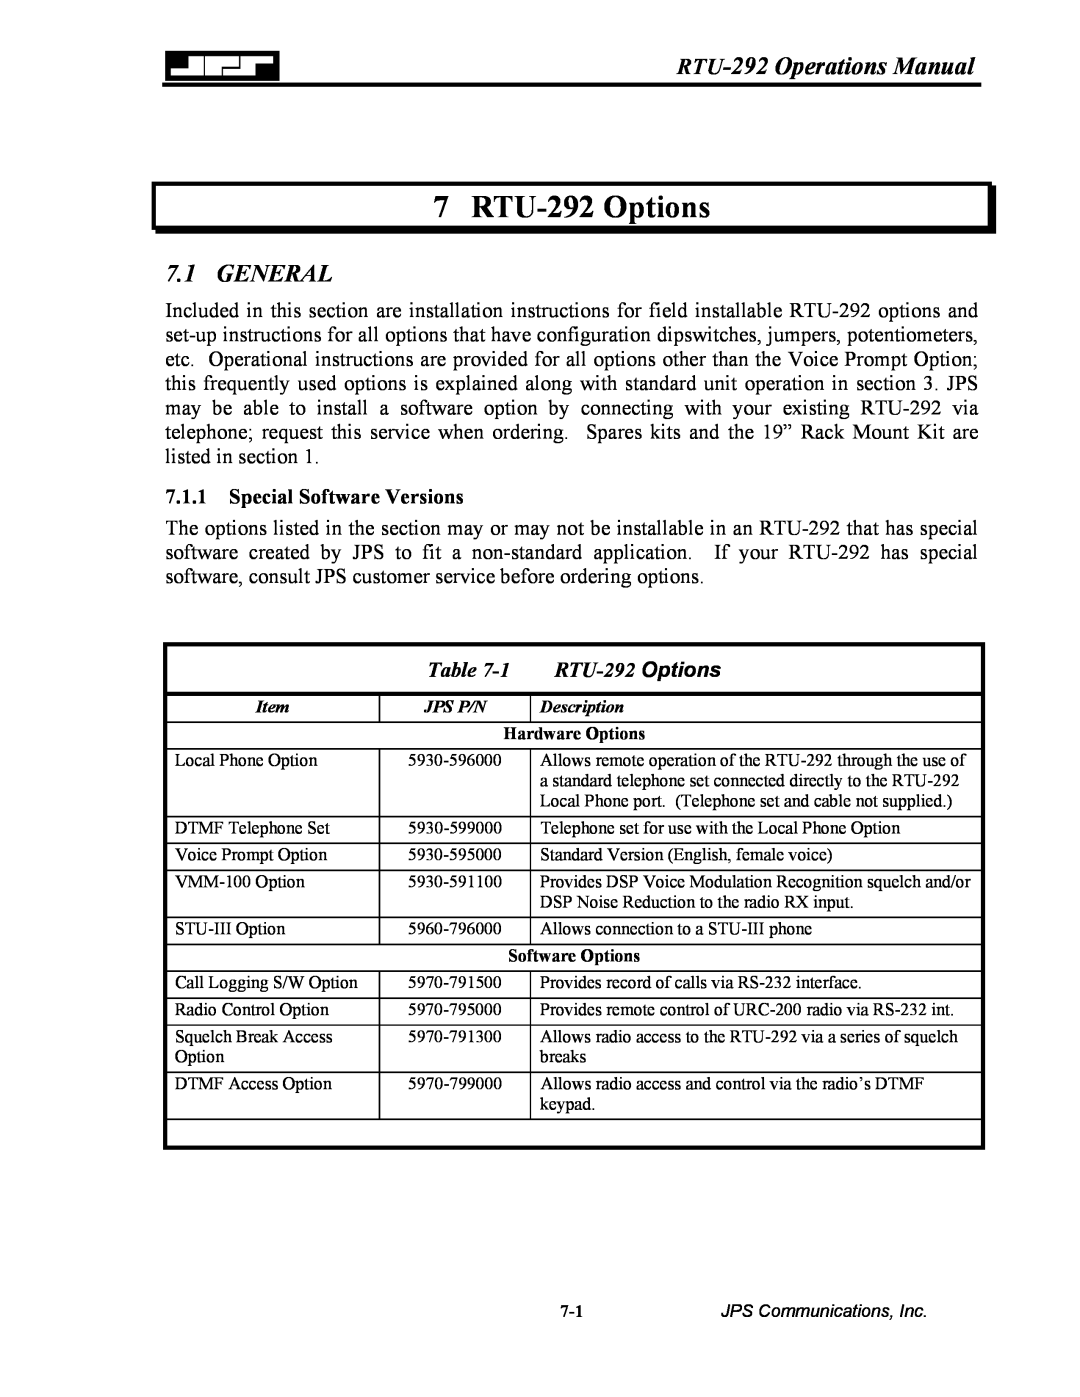 Nortel Networks operation manual RTU-292 Options, General, RTU-292 Operations Manual, Special Software Versions 